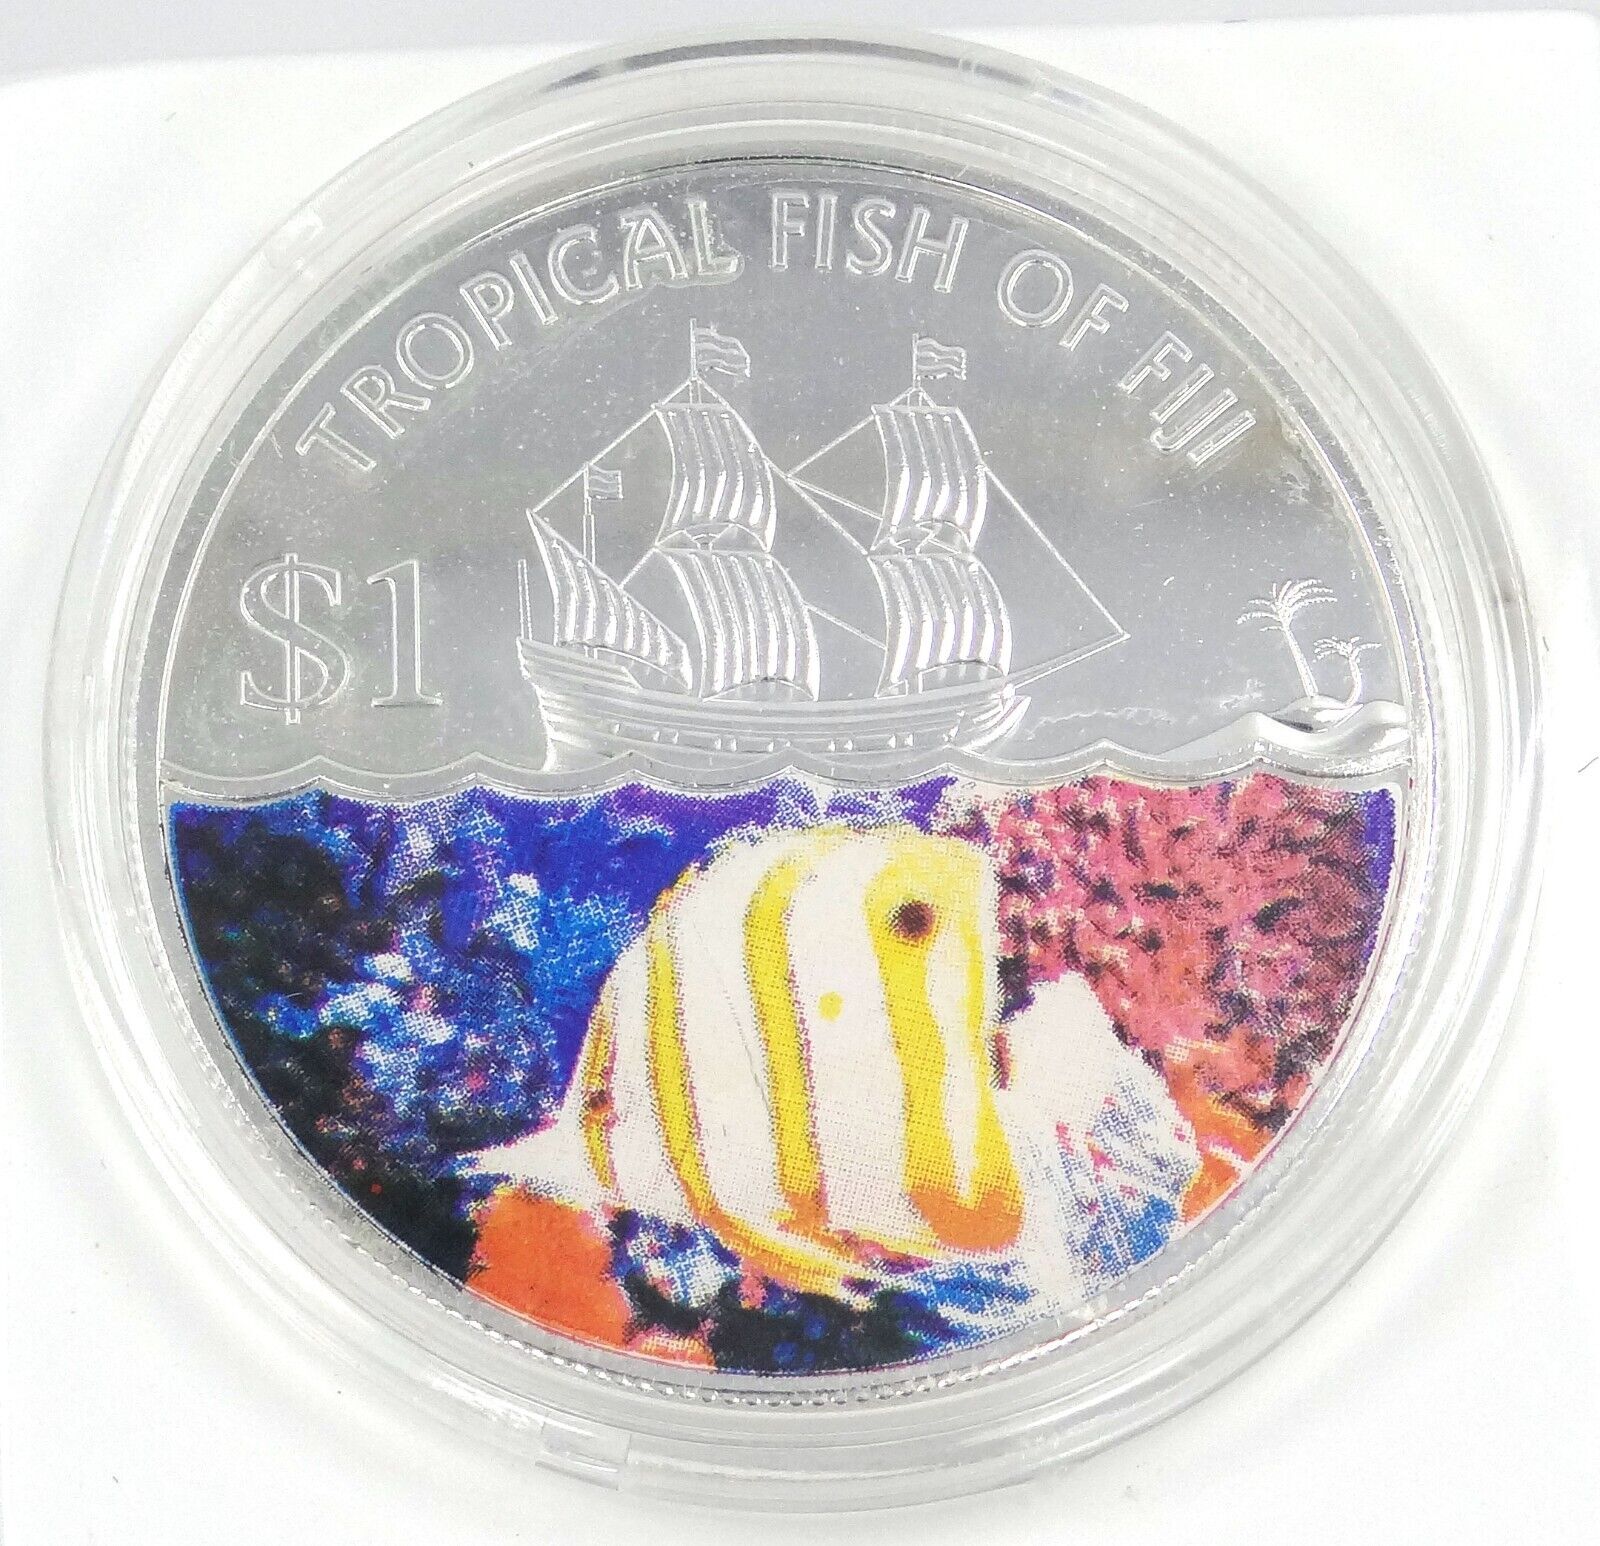 25g Silver Coin 2009 Fiji $1 Tropical Fish of Fiji Copperband Butterflyfish-classypw.com-1